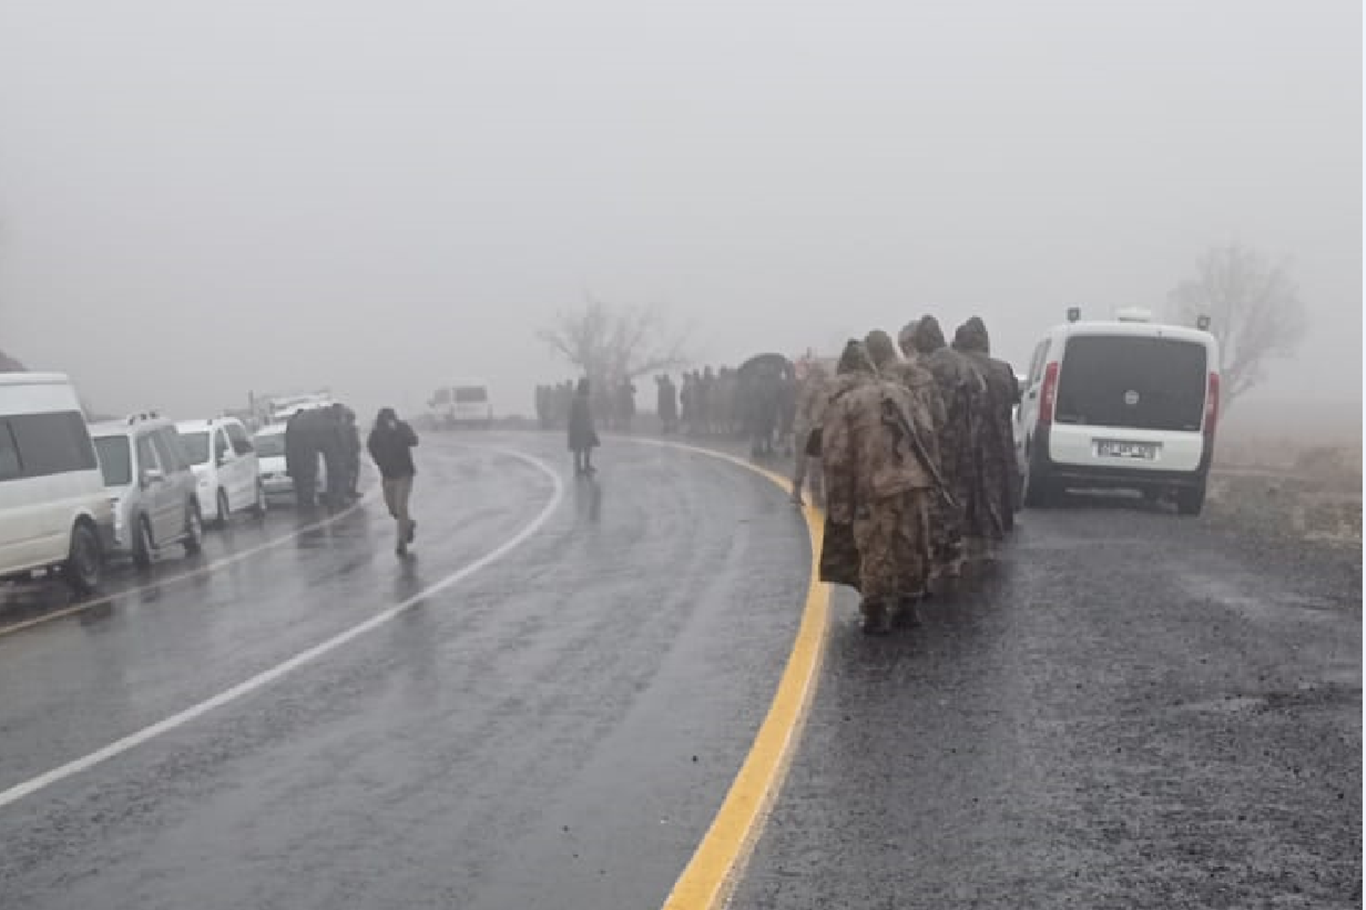 diyarbakirda-mantar-toplamaya-giderken-kaybolan-cocuk-bulundu-3.png